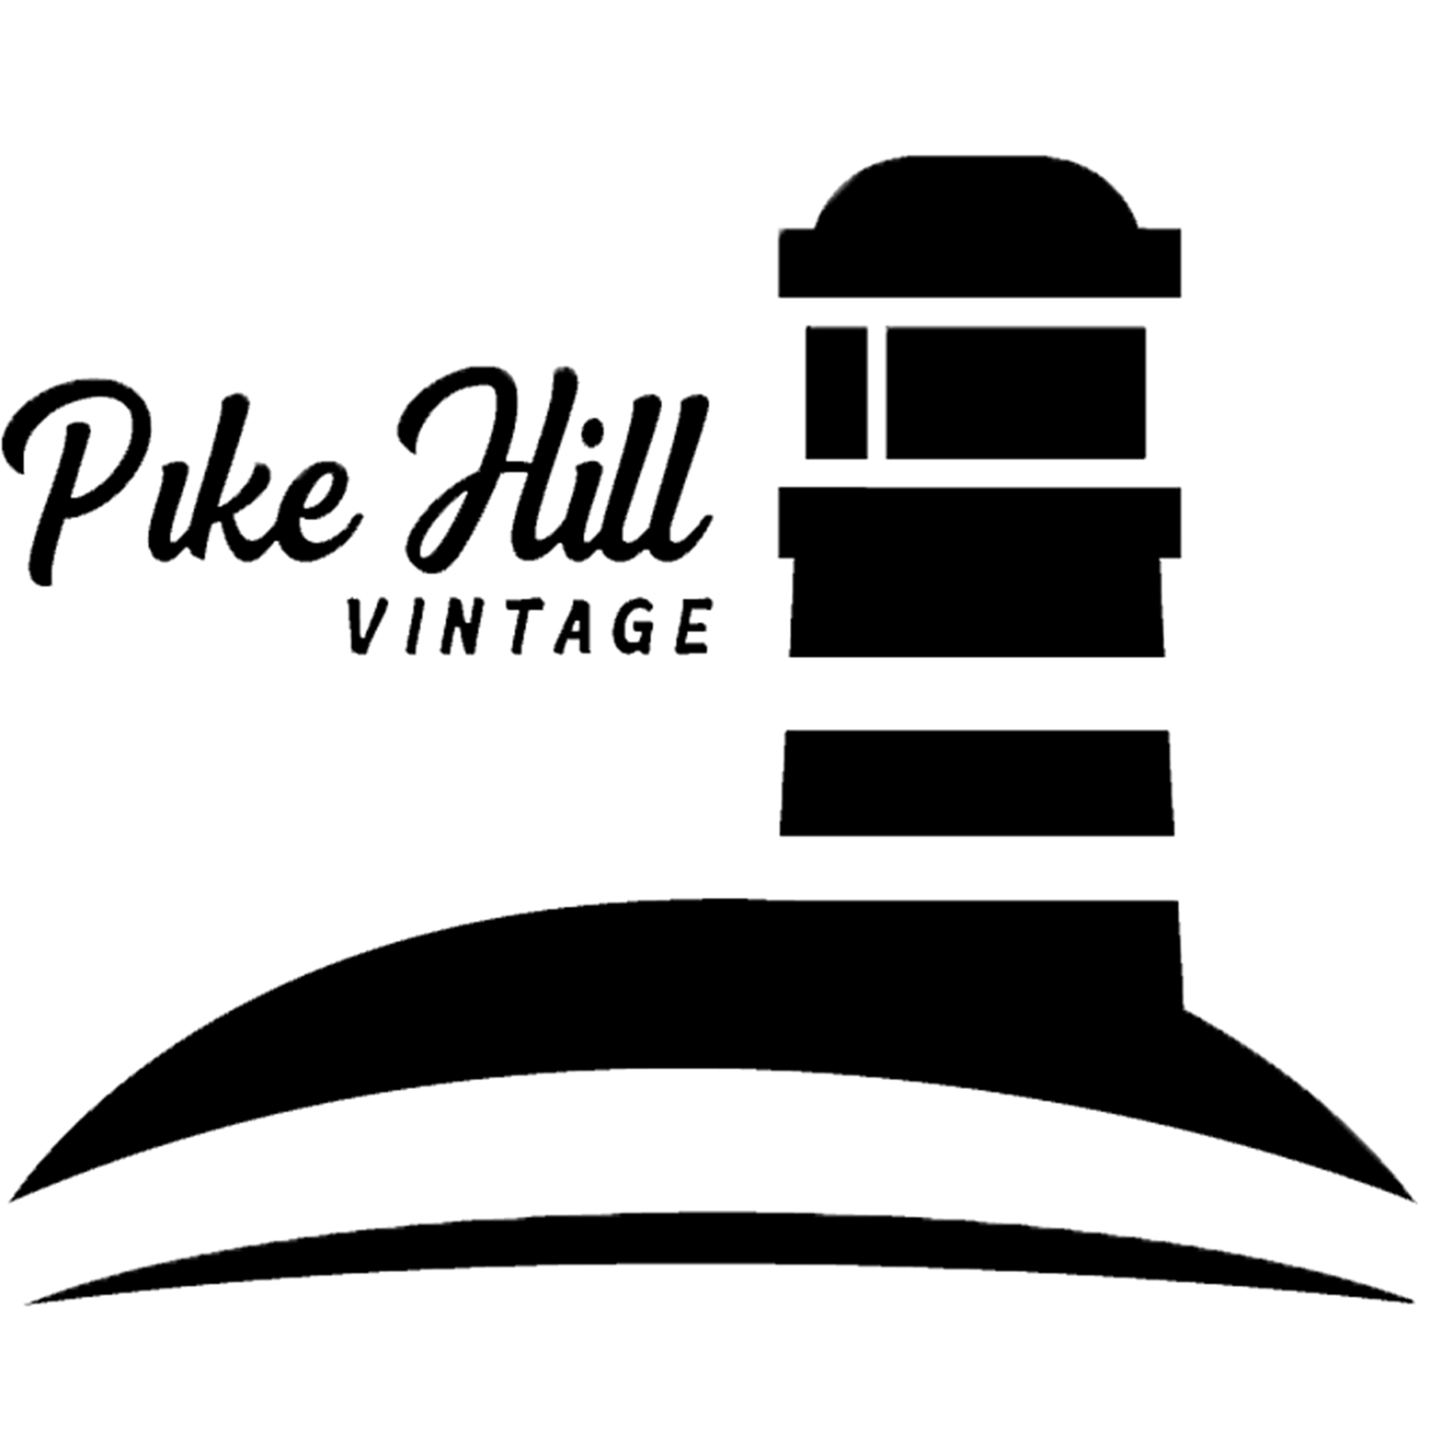 Pike Hill Vintage 